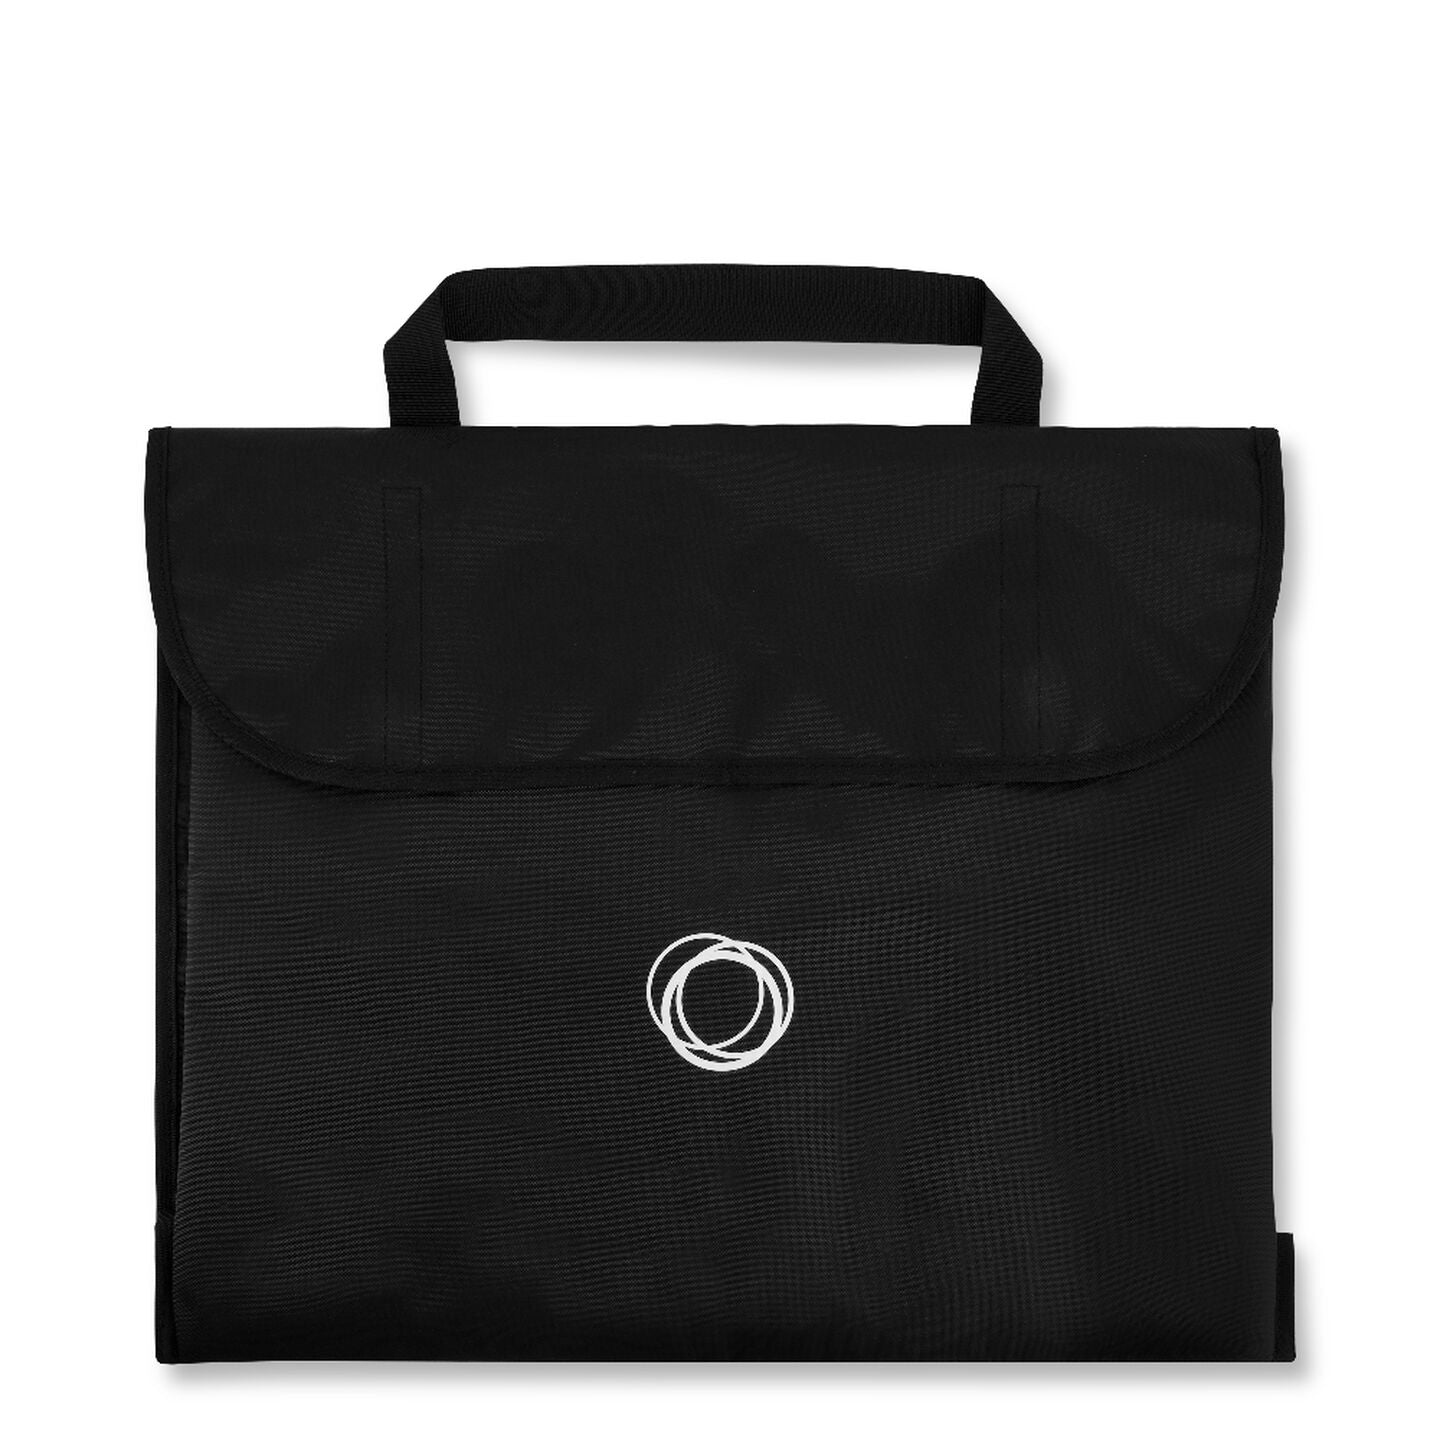 Bugaboo wheel bag for comfort transport bag